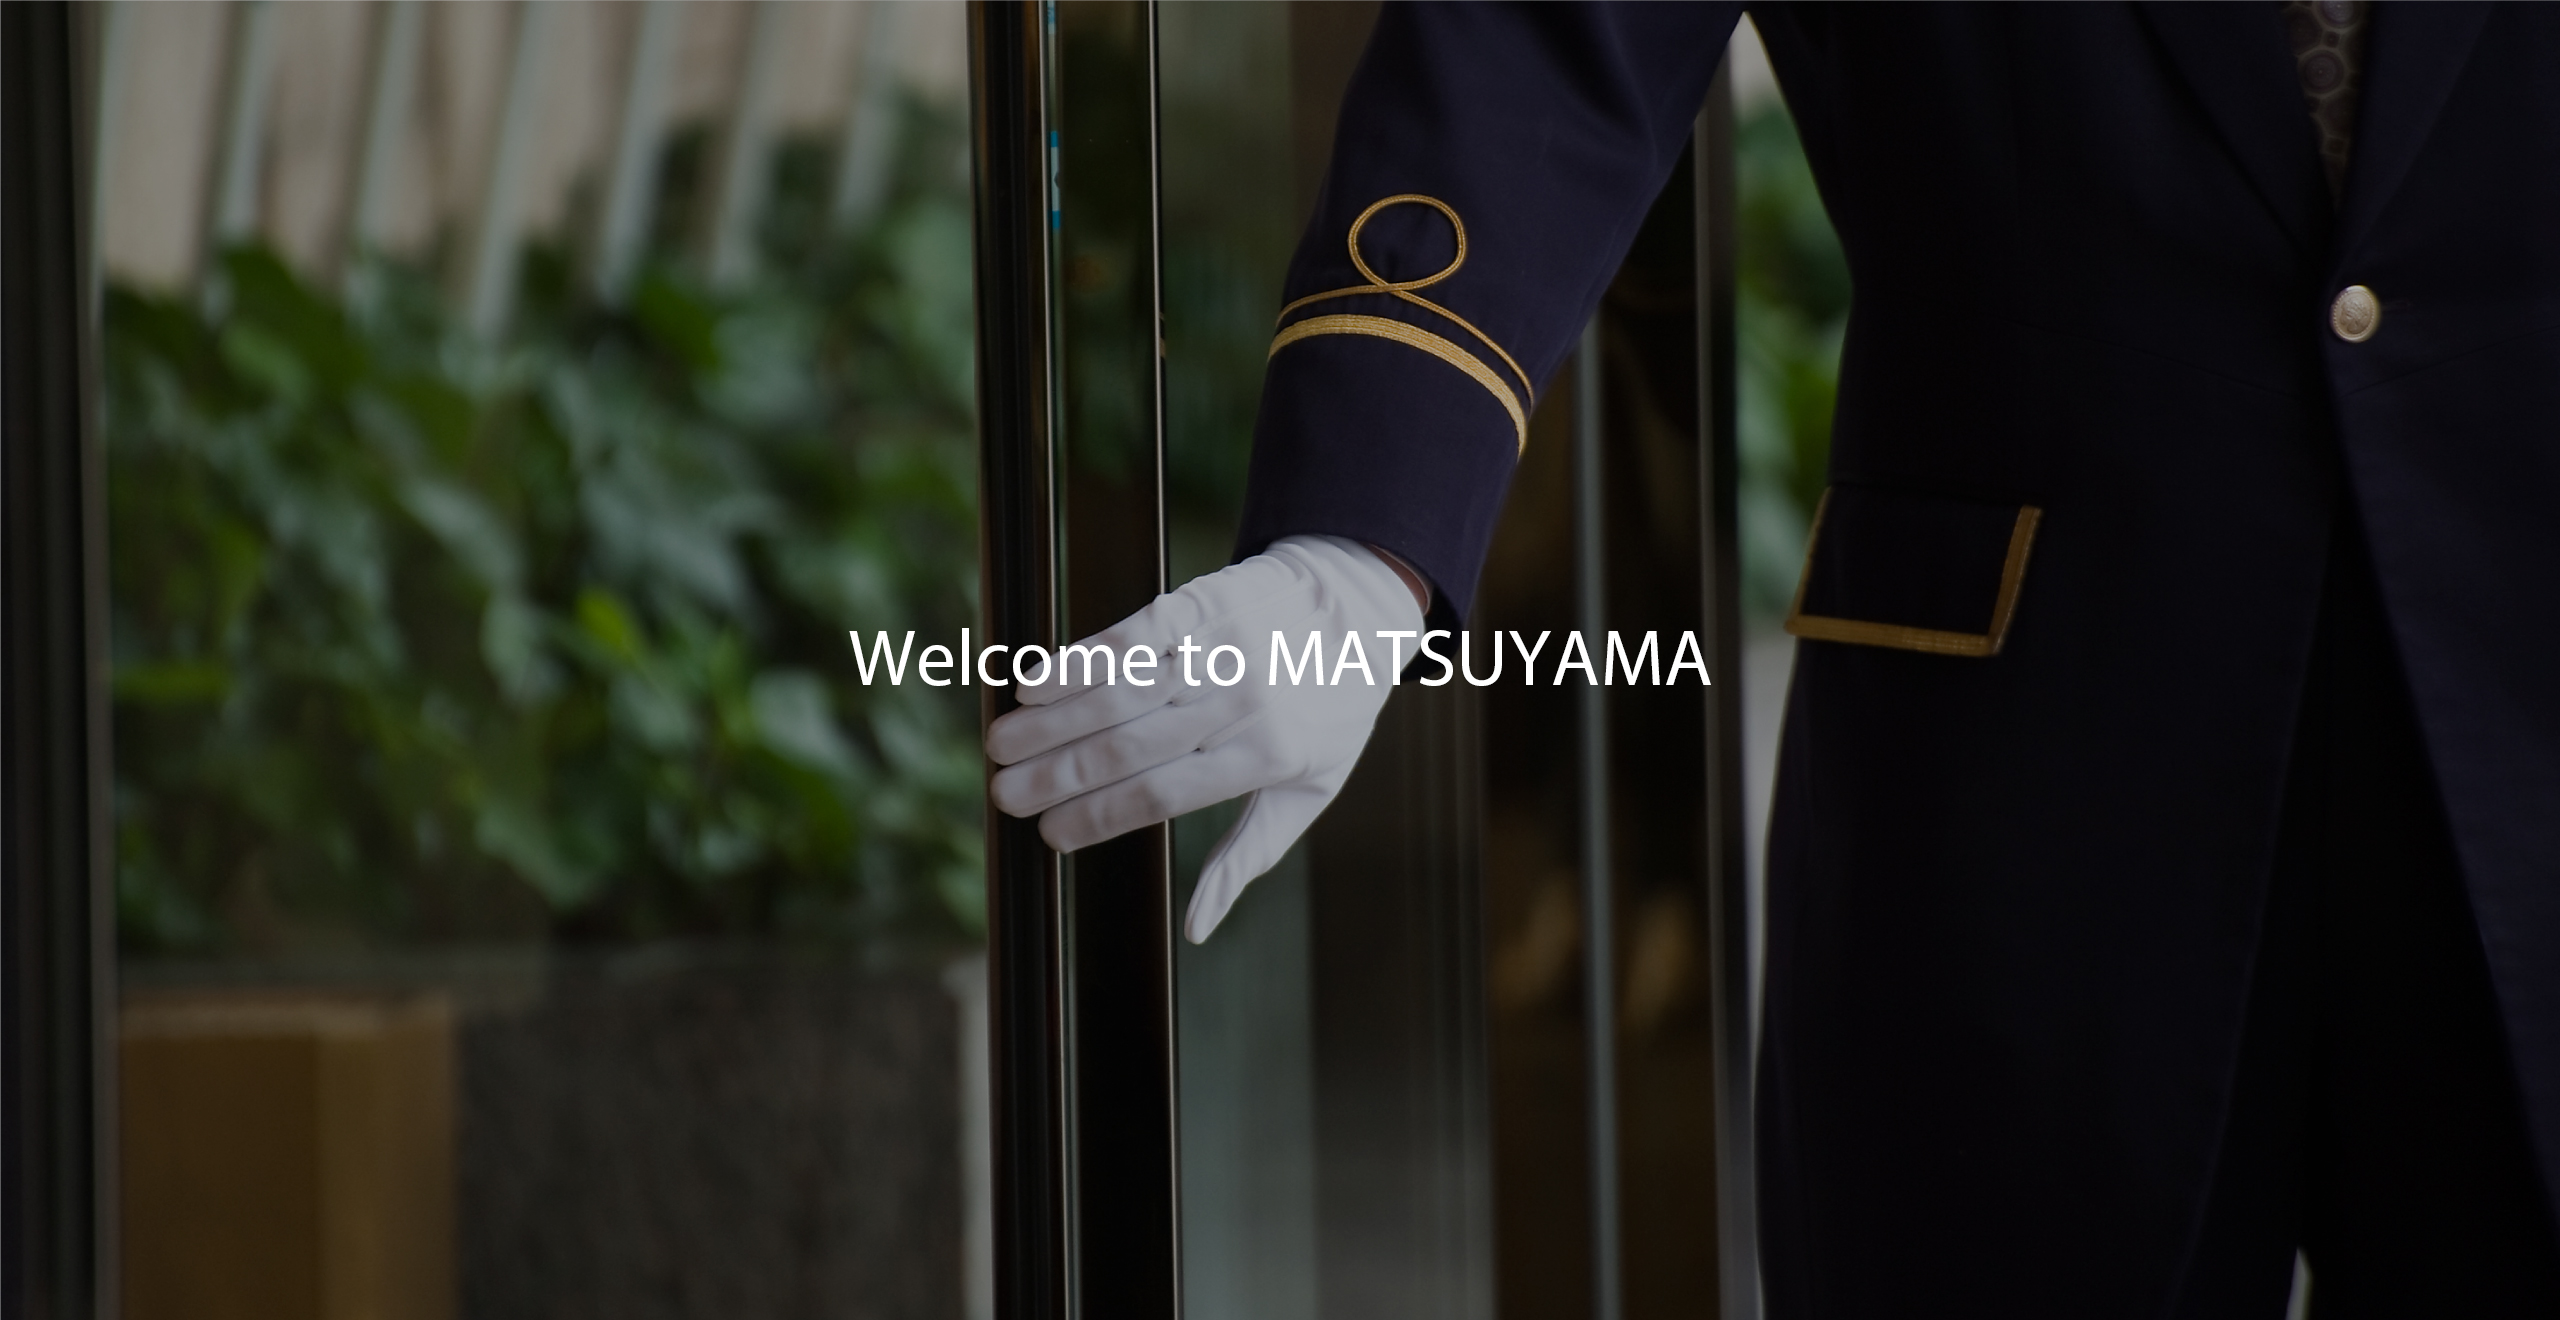 Welcome to MATSUYAMA